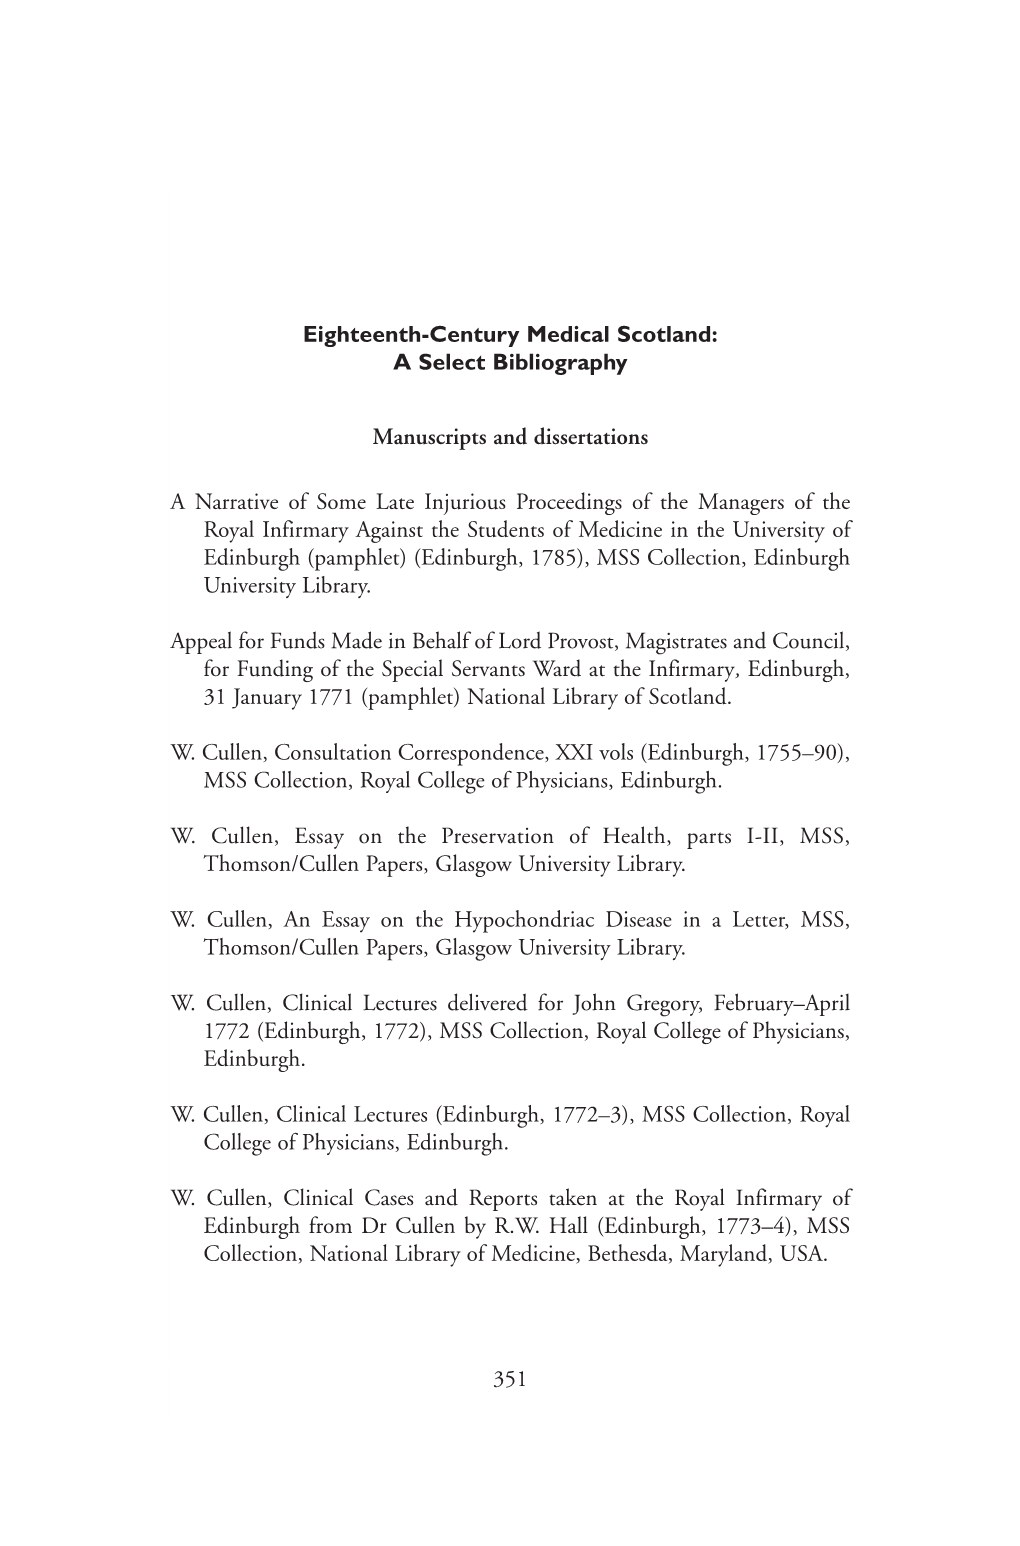 Eighteenth-Century Medical Scotland: a Select Bibliography